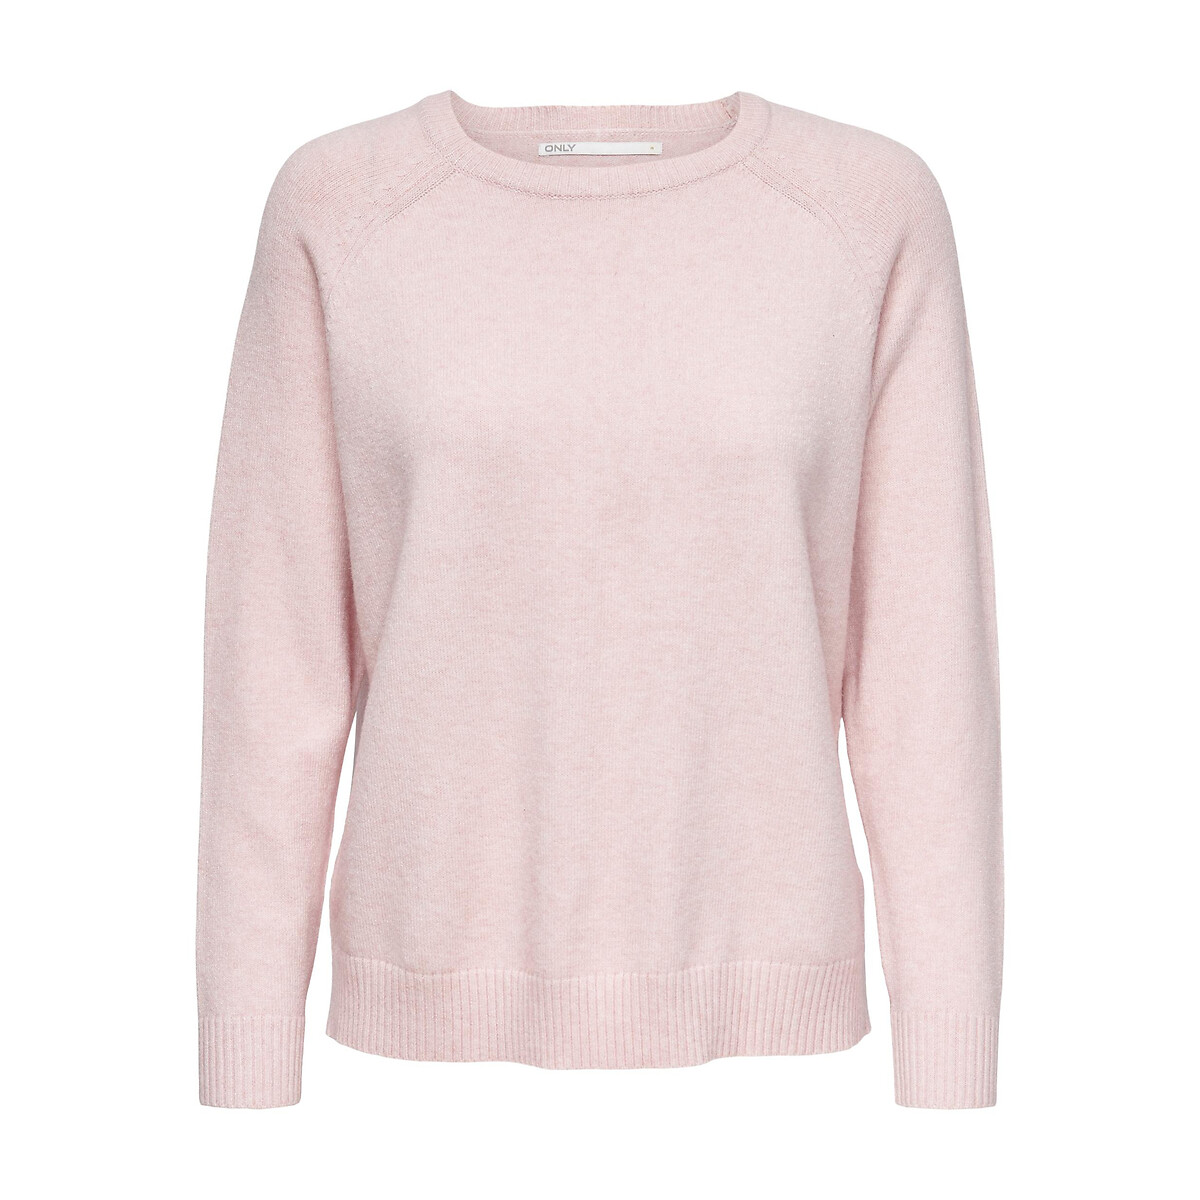 Пуловер ONLY С круглым вырезом S розовый, размер S - фото 3